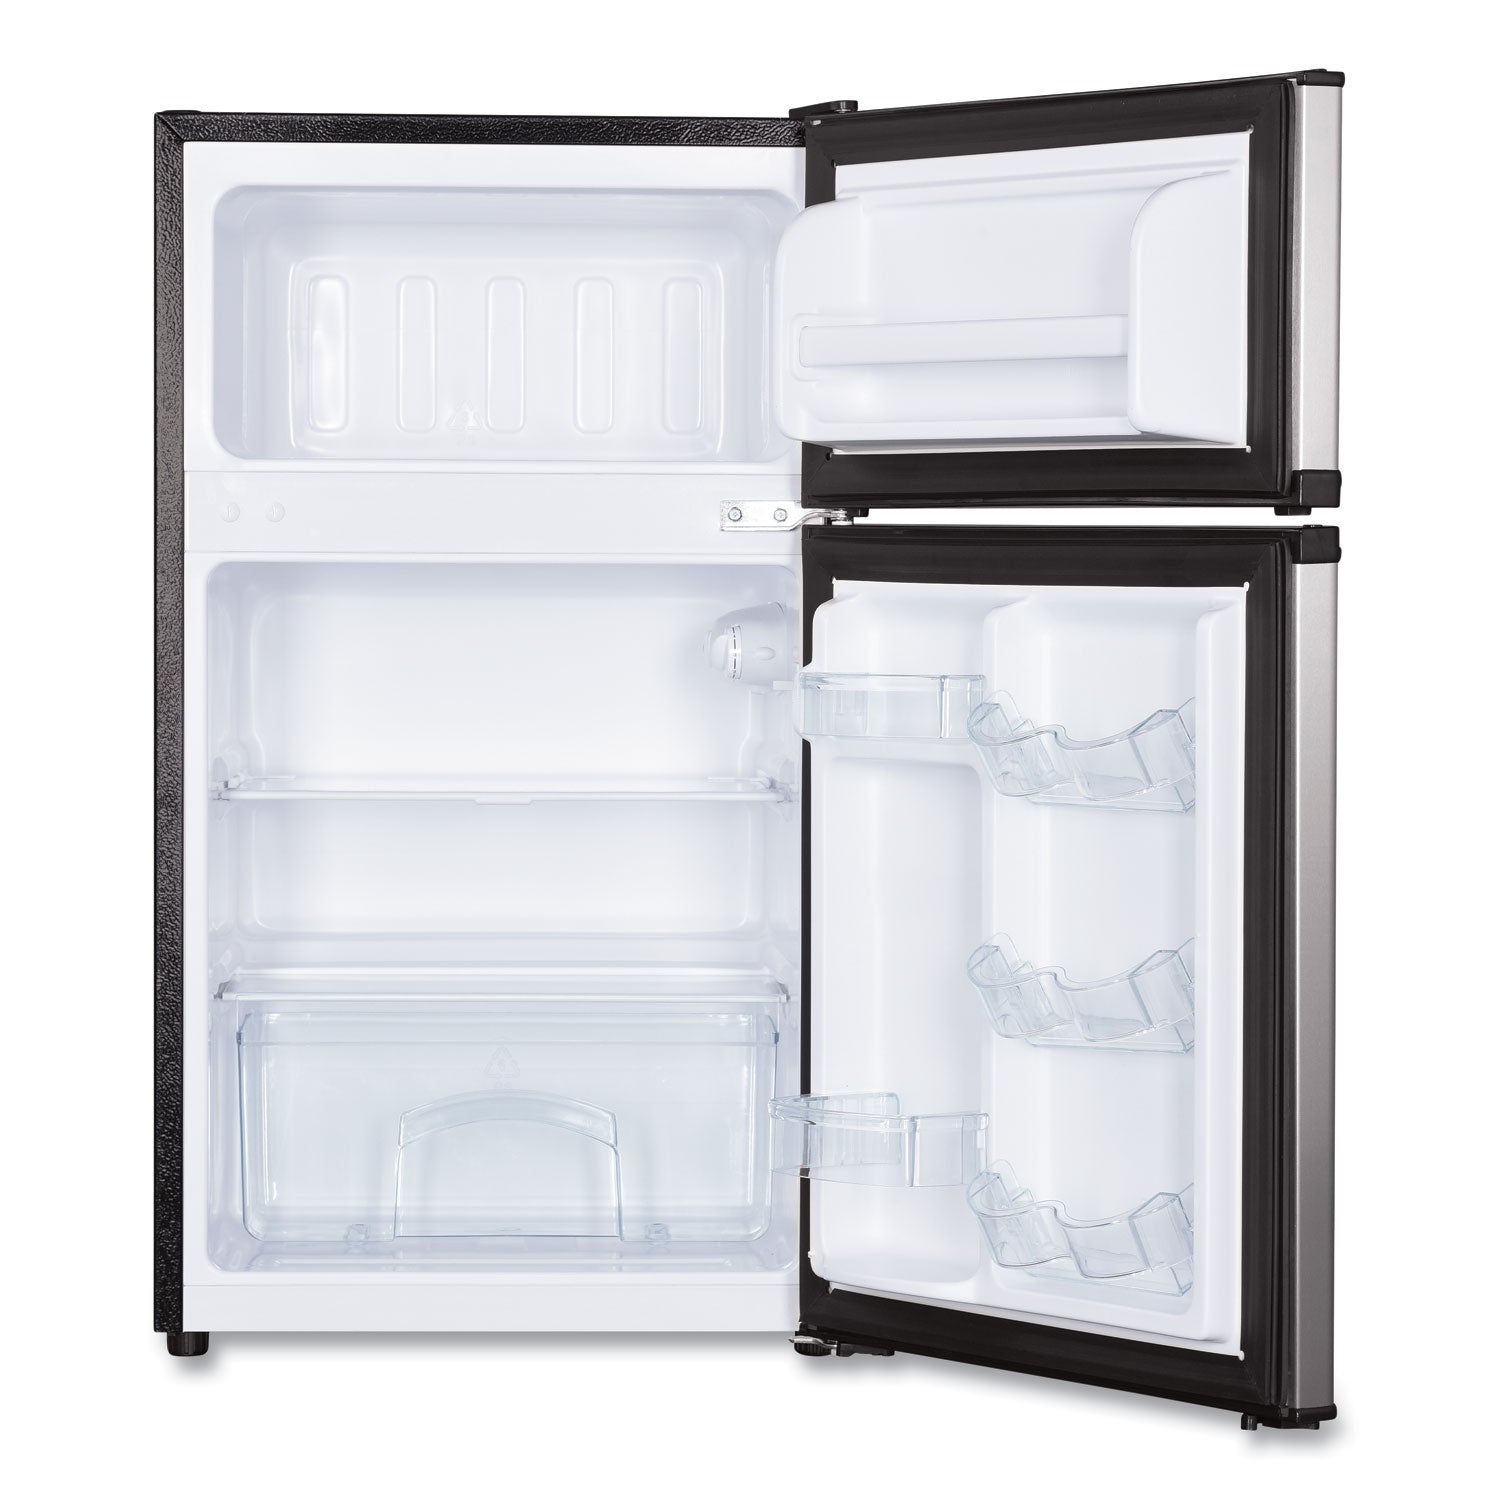 counter-height-31-cu-ft-two-door-refrigerator-freezer-black-stainless-steel_avara31b3s - 2